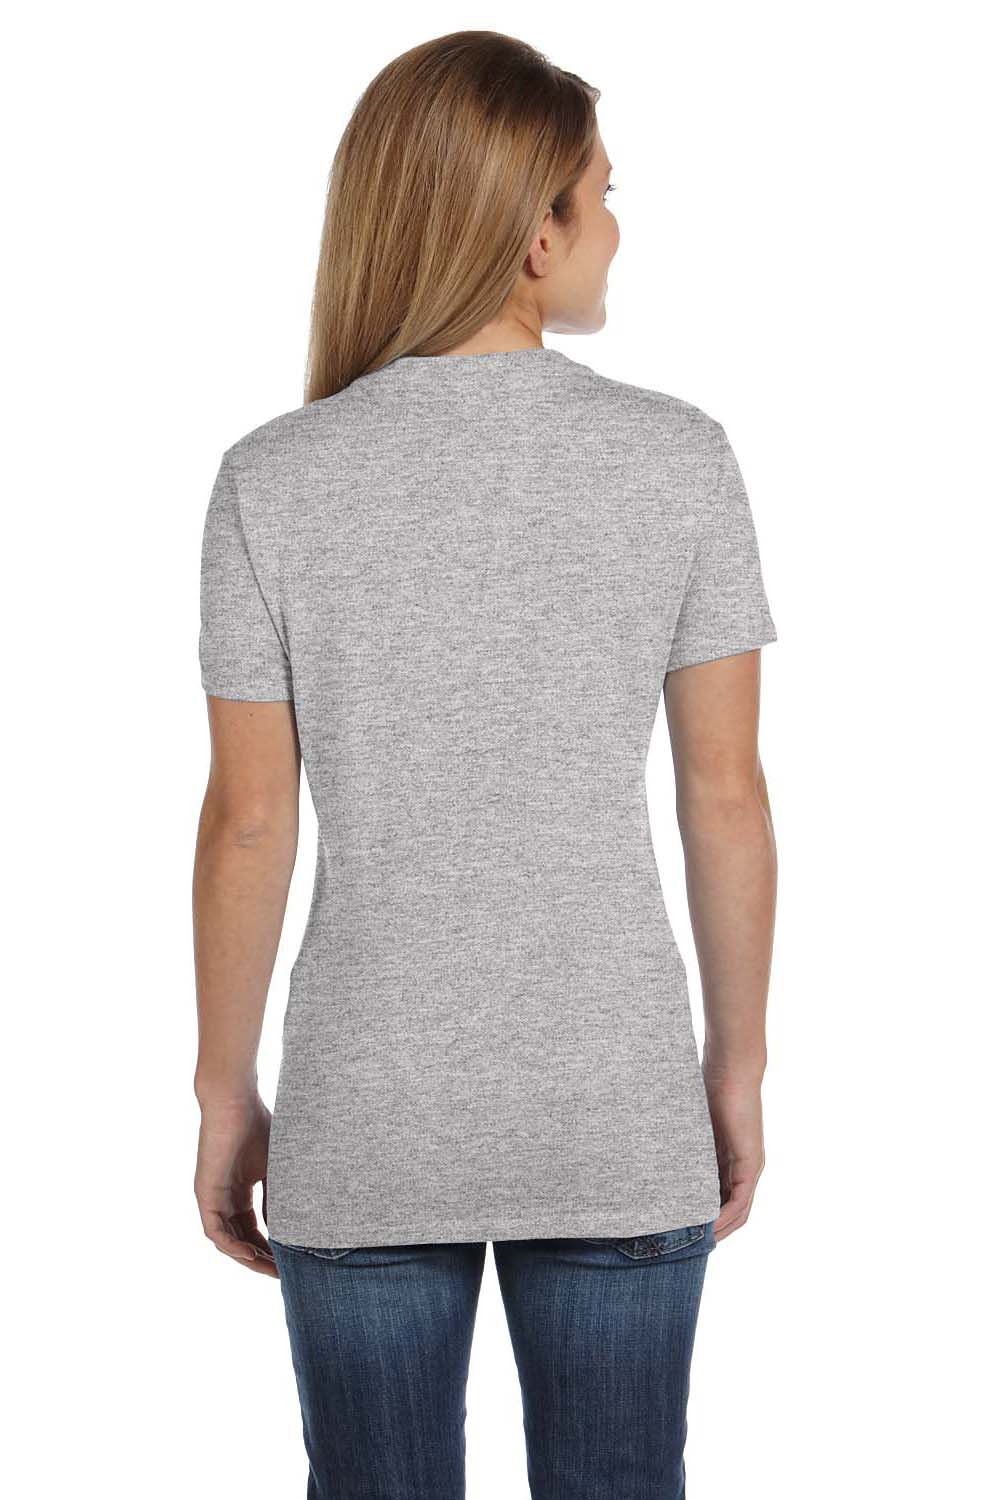 Hanes S04V Womens Nano-T Short Sleeve V-Neck T-Shirt Light Steel Grey Back